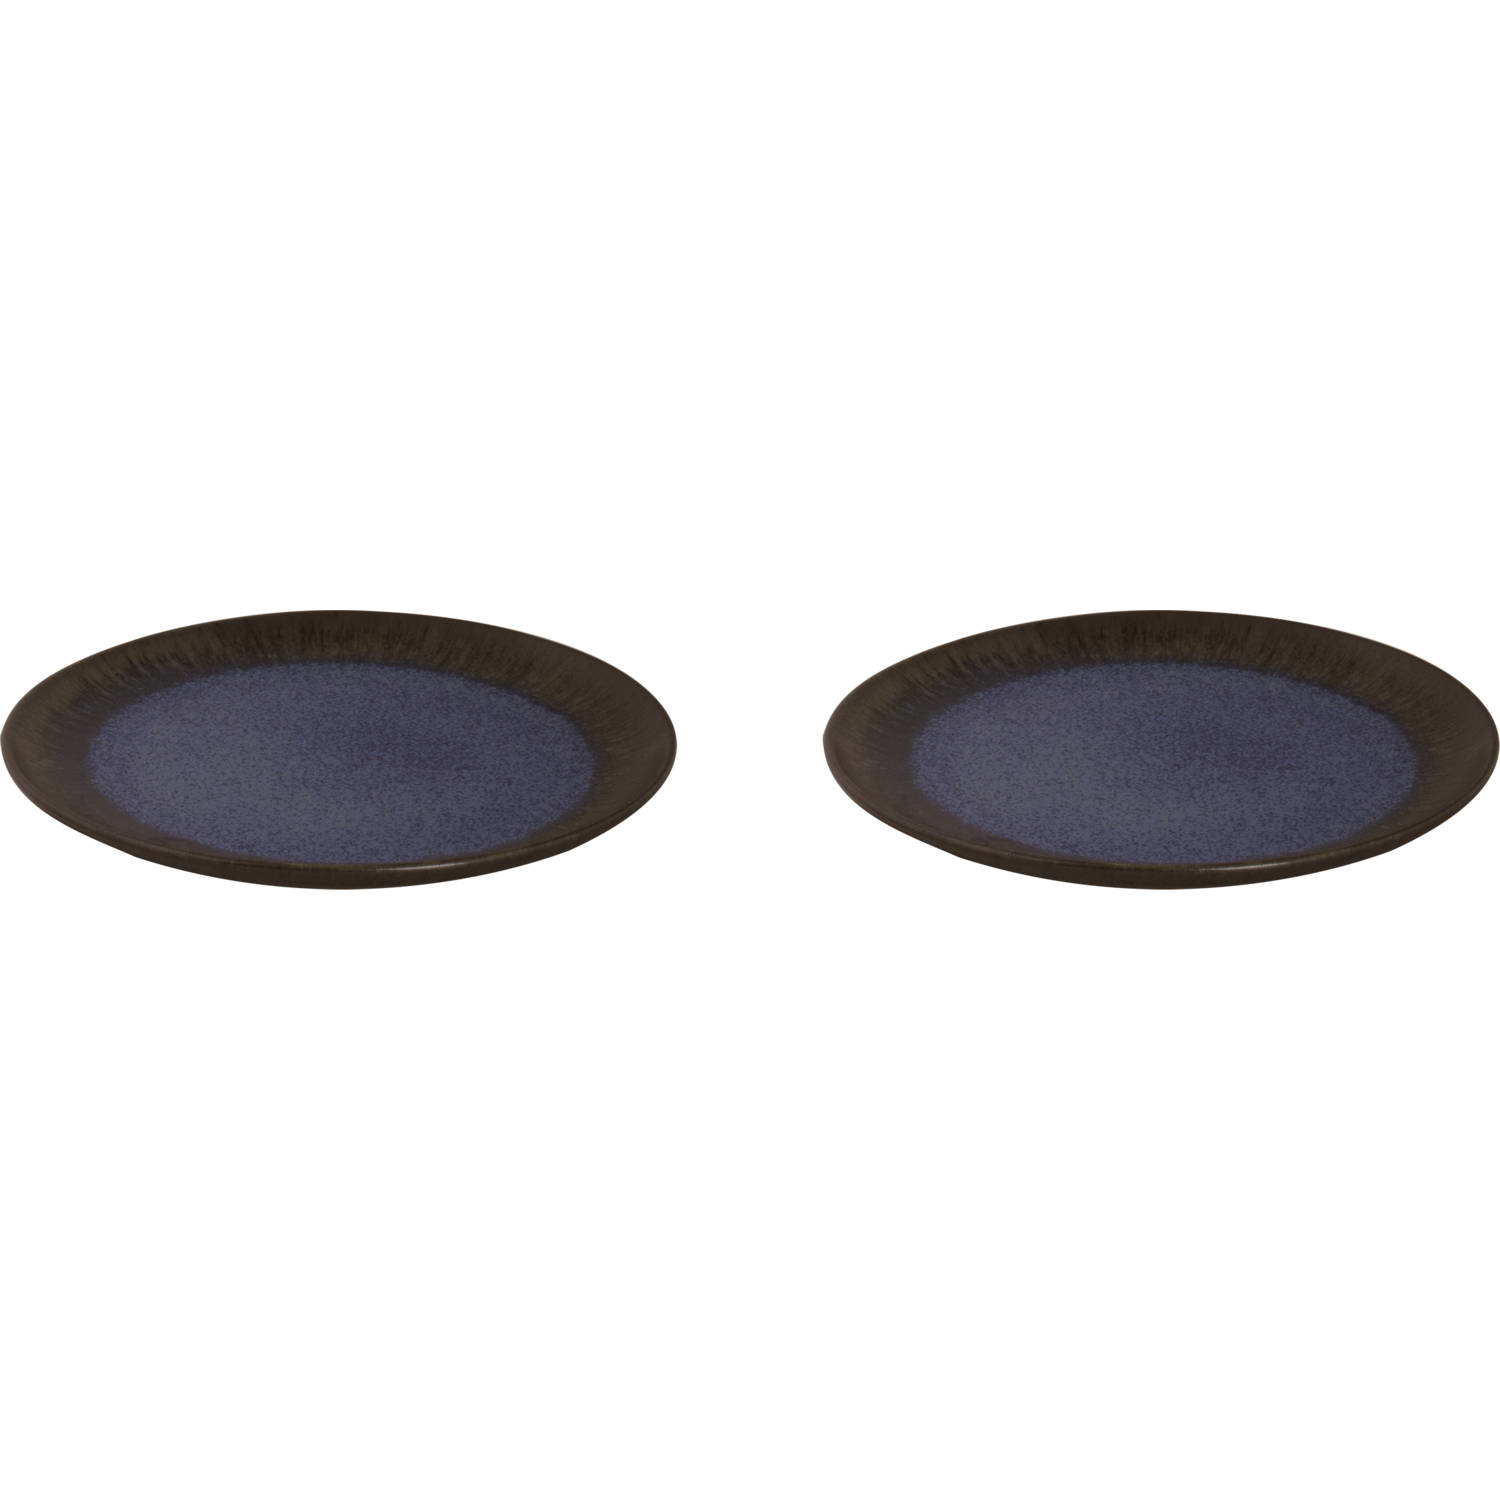 Palmer Bord Tama 28.5 cm Blauw Zwart Stoneware 2 stuk(s)